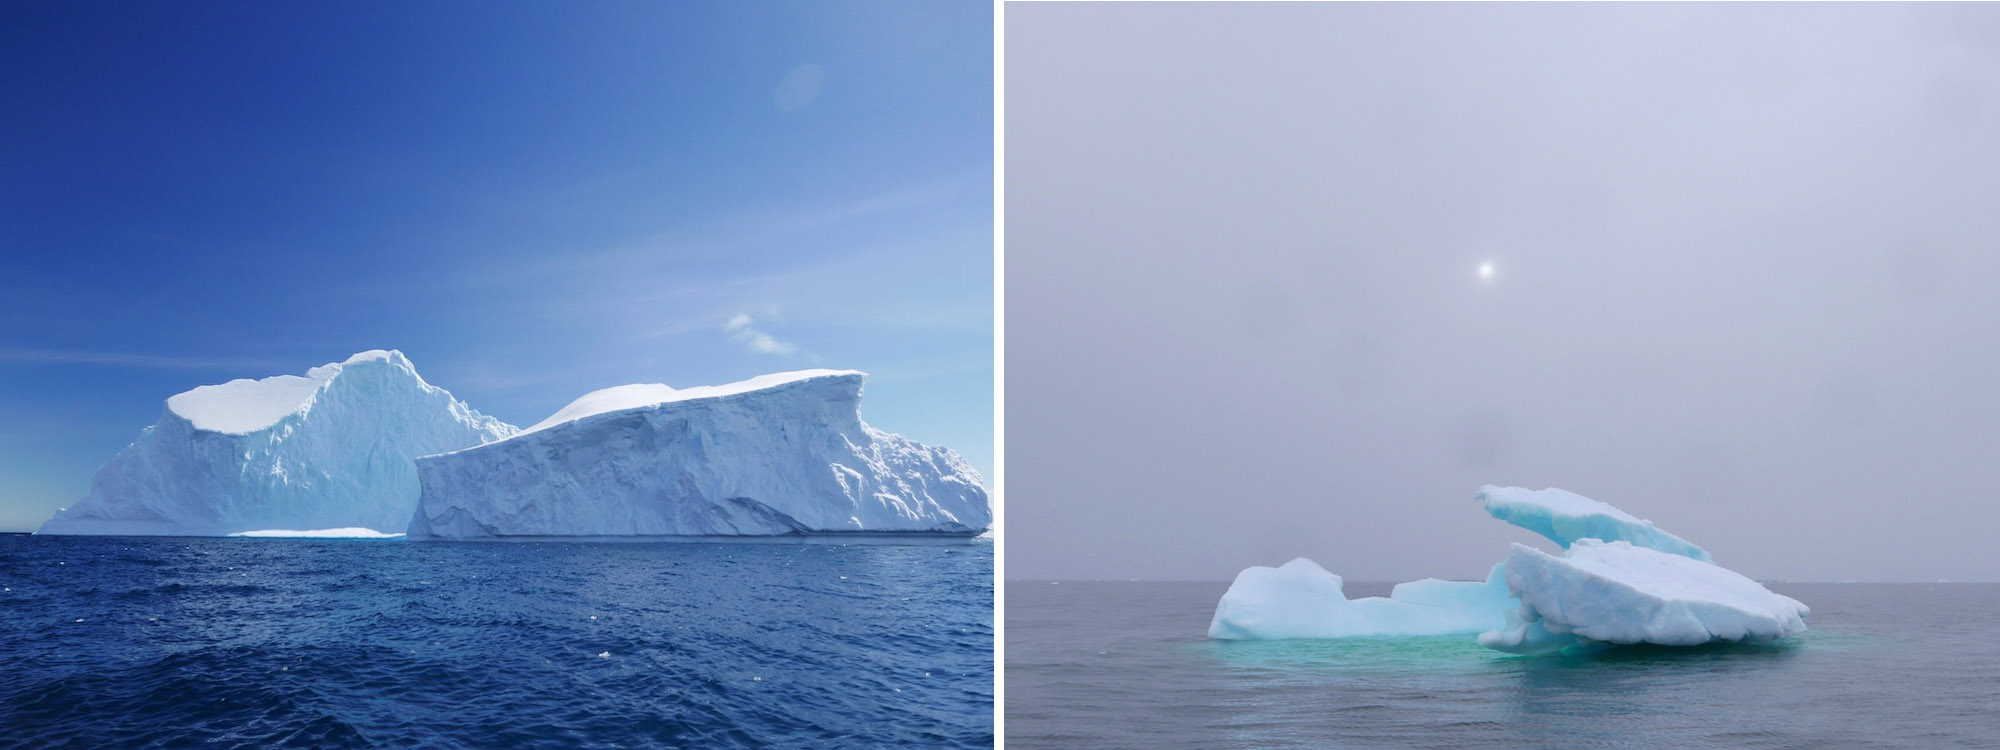 Iceberg versus bergy bit